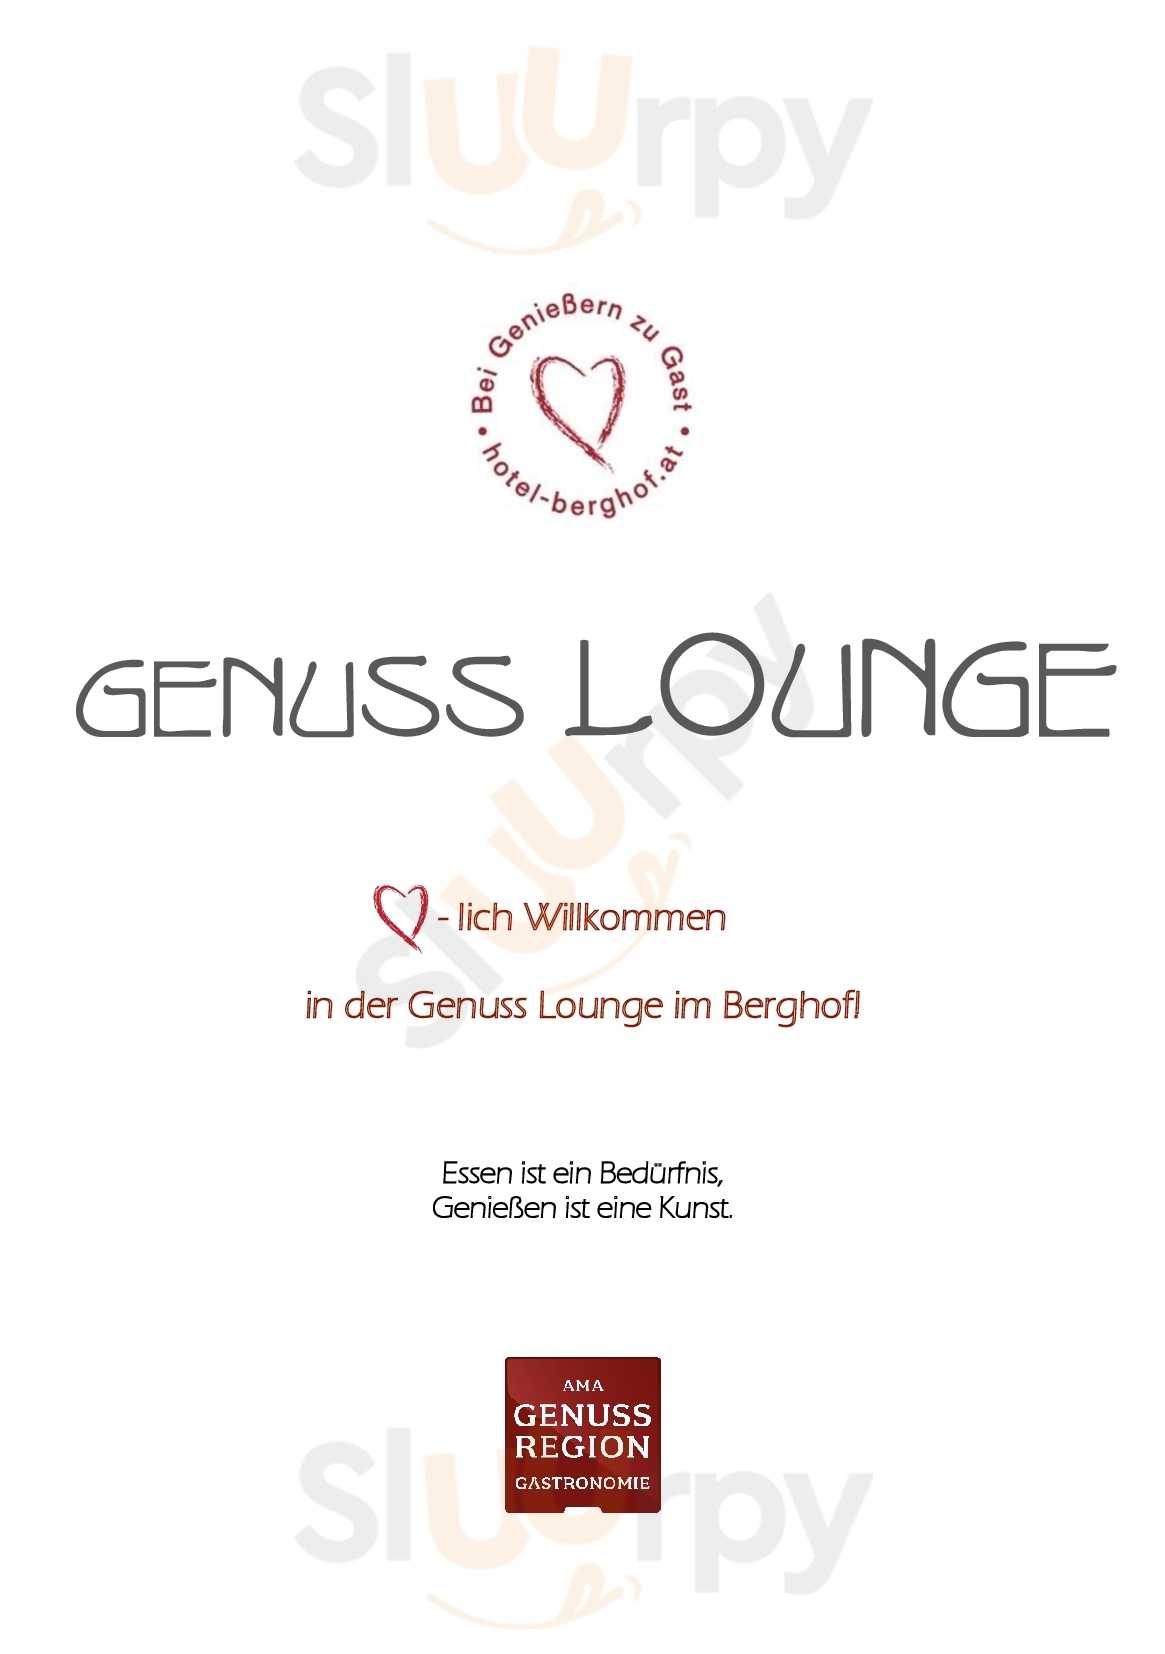 Genuss Lounge Im Berghof Ramsau am Dachstein Menu - 1